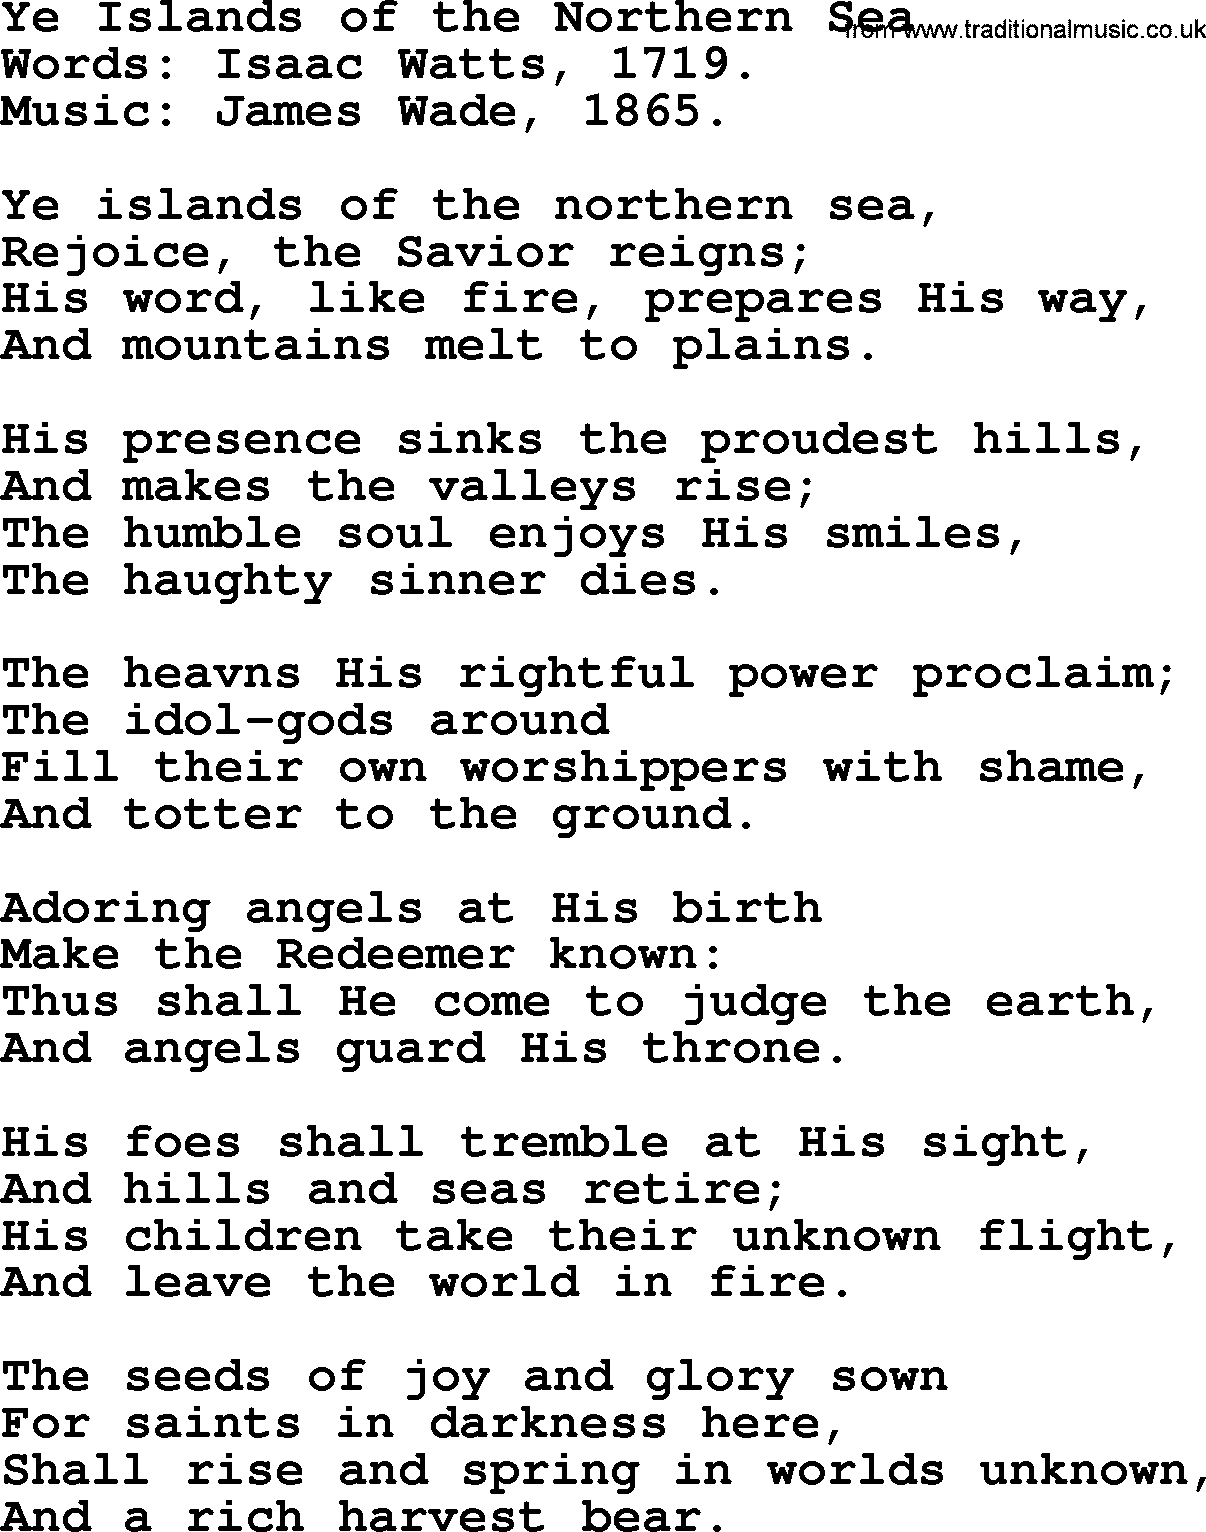 Isaac Watts Christian hymn: Ye Islands of the Northern Sea- lyricss